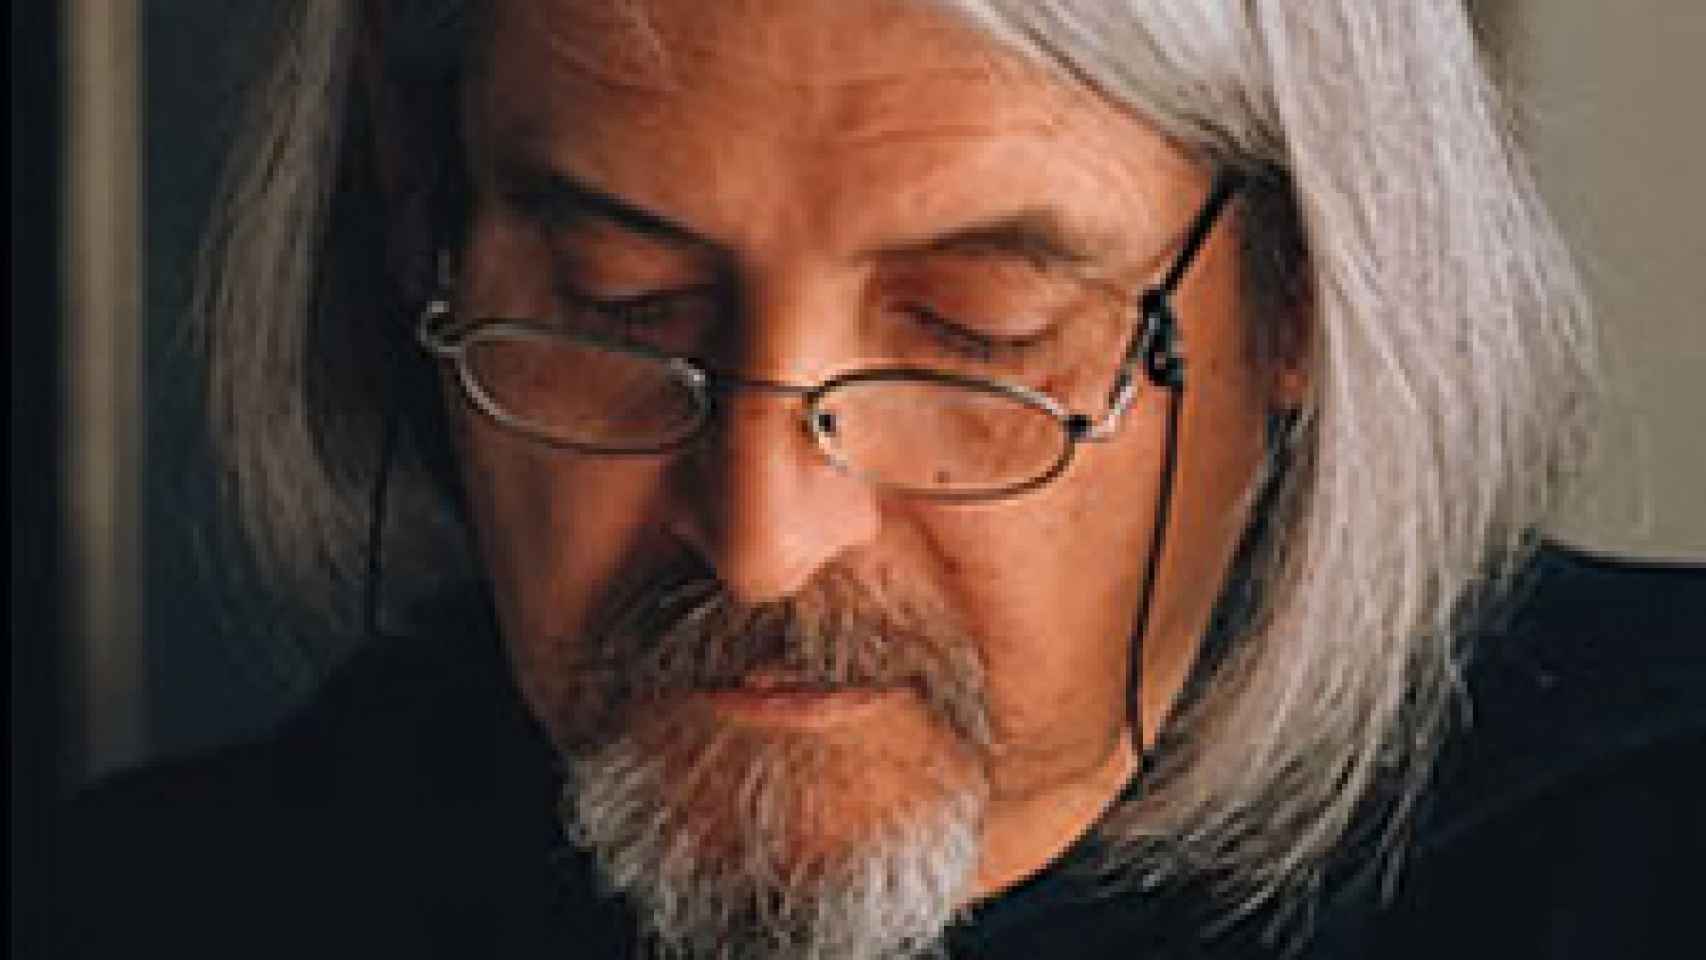 Image: Fallece José Hernández